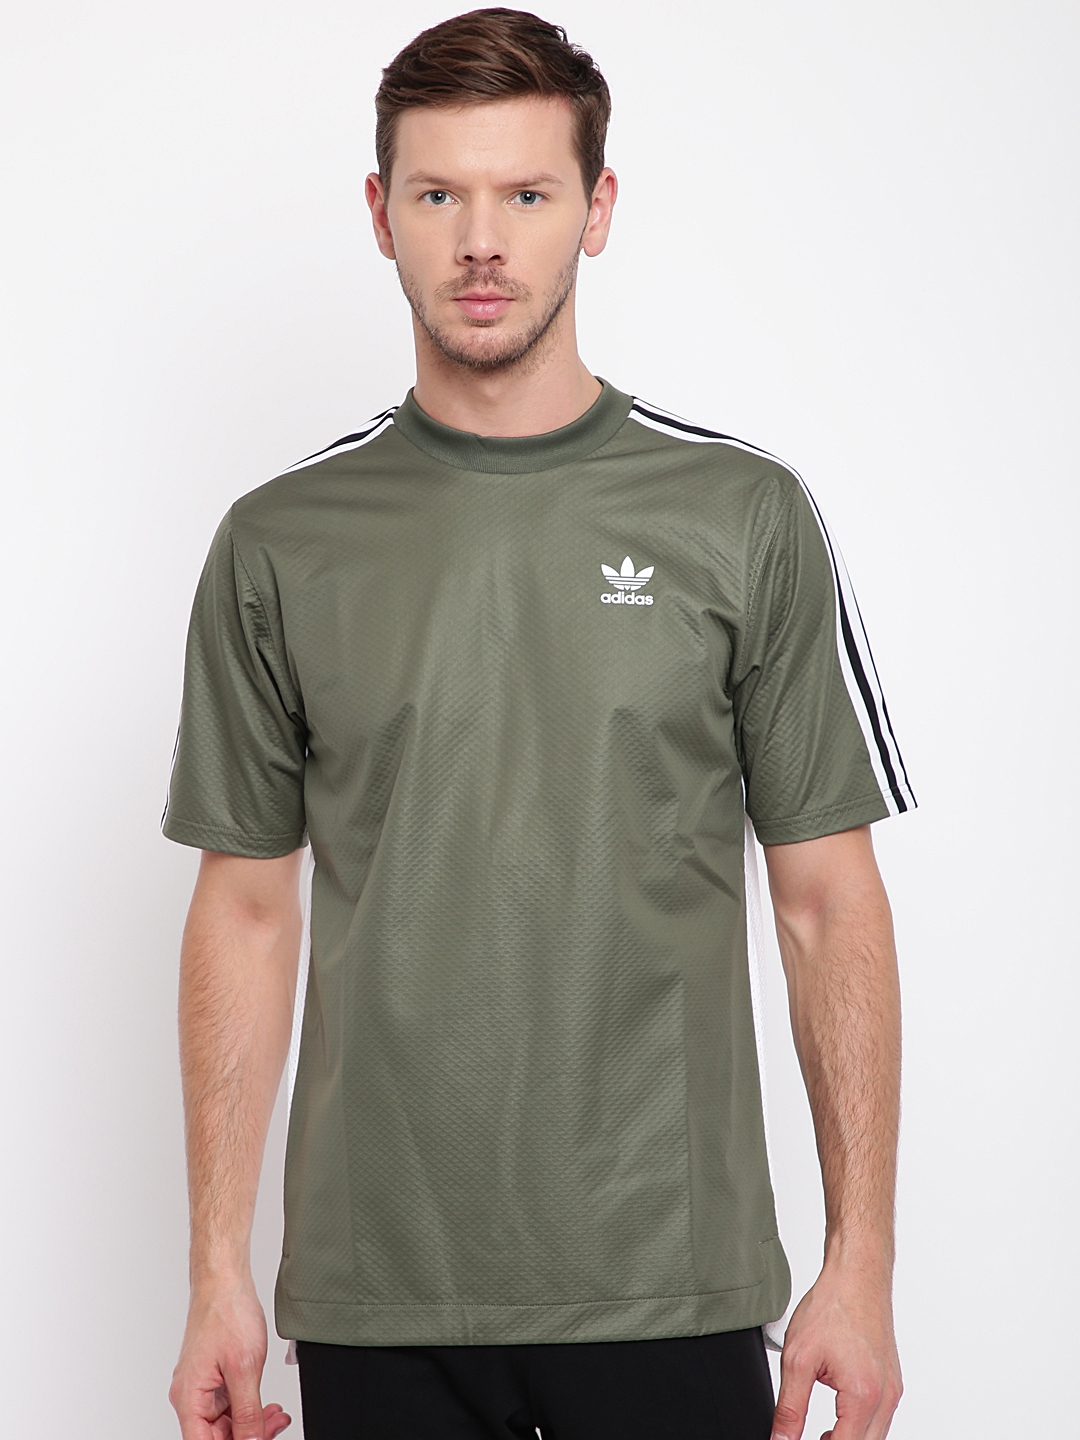 army green adidas shirt